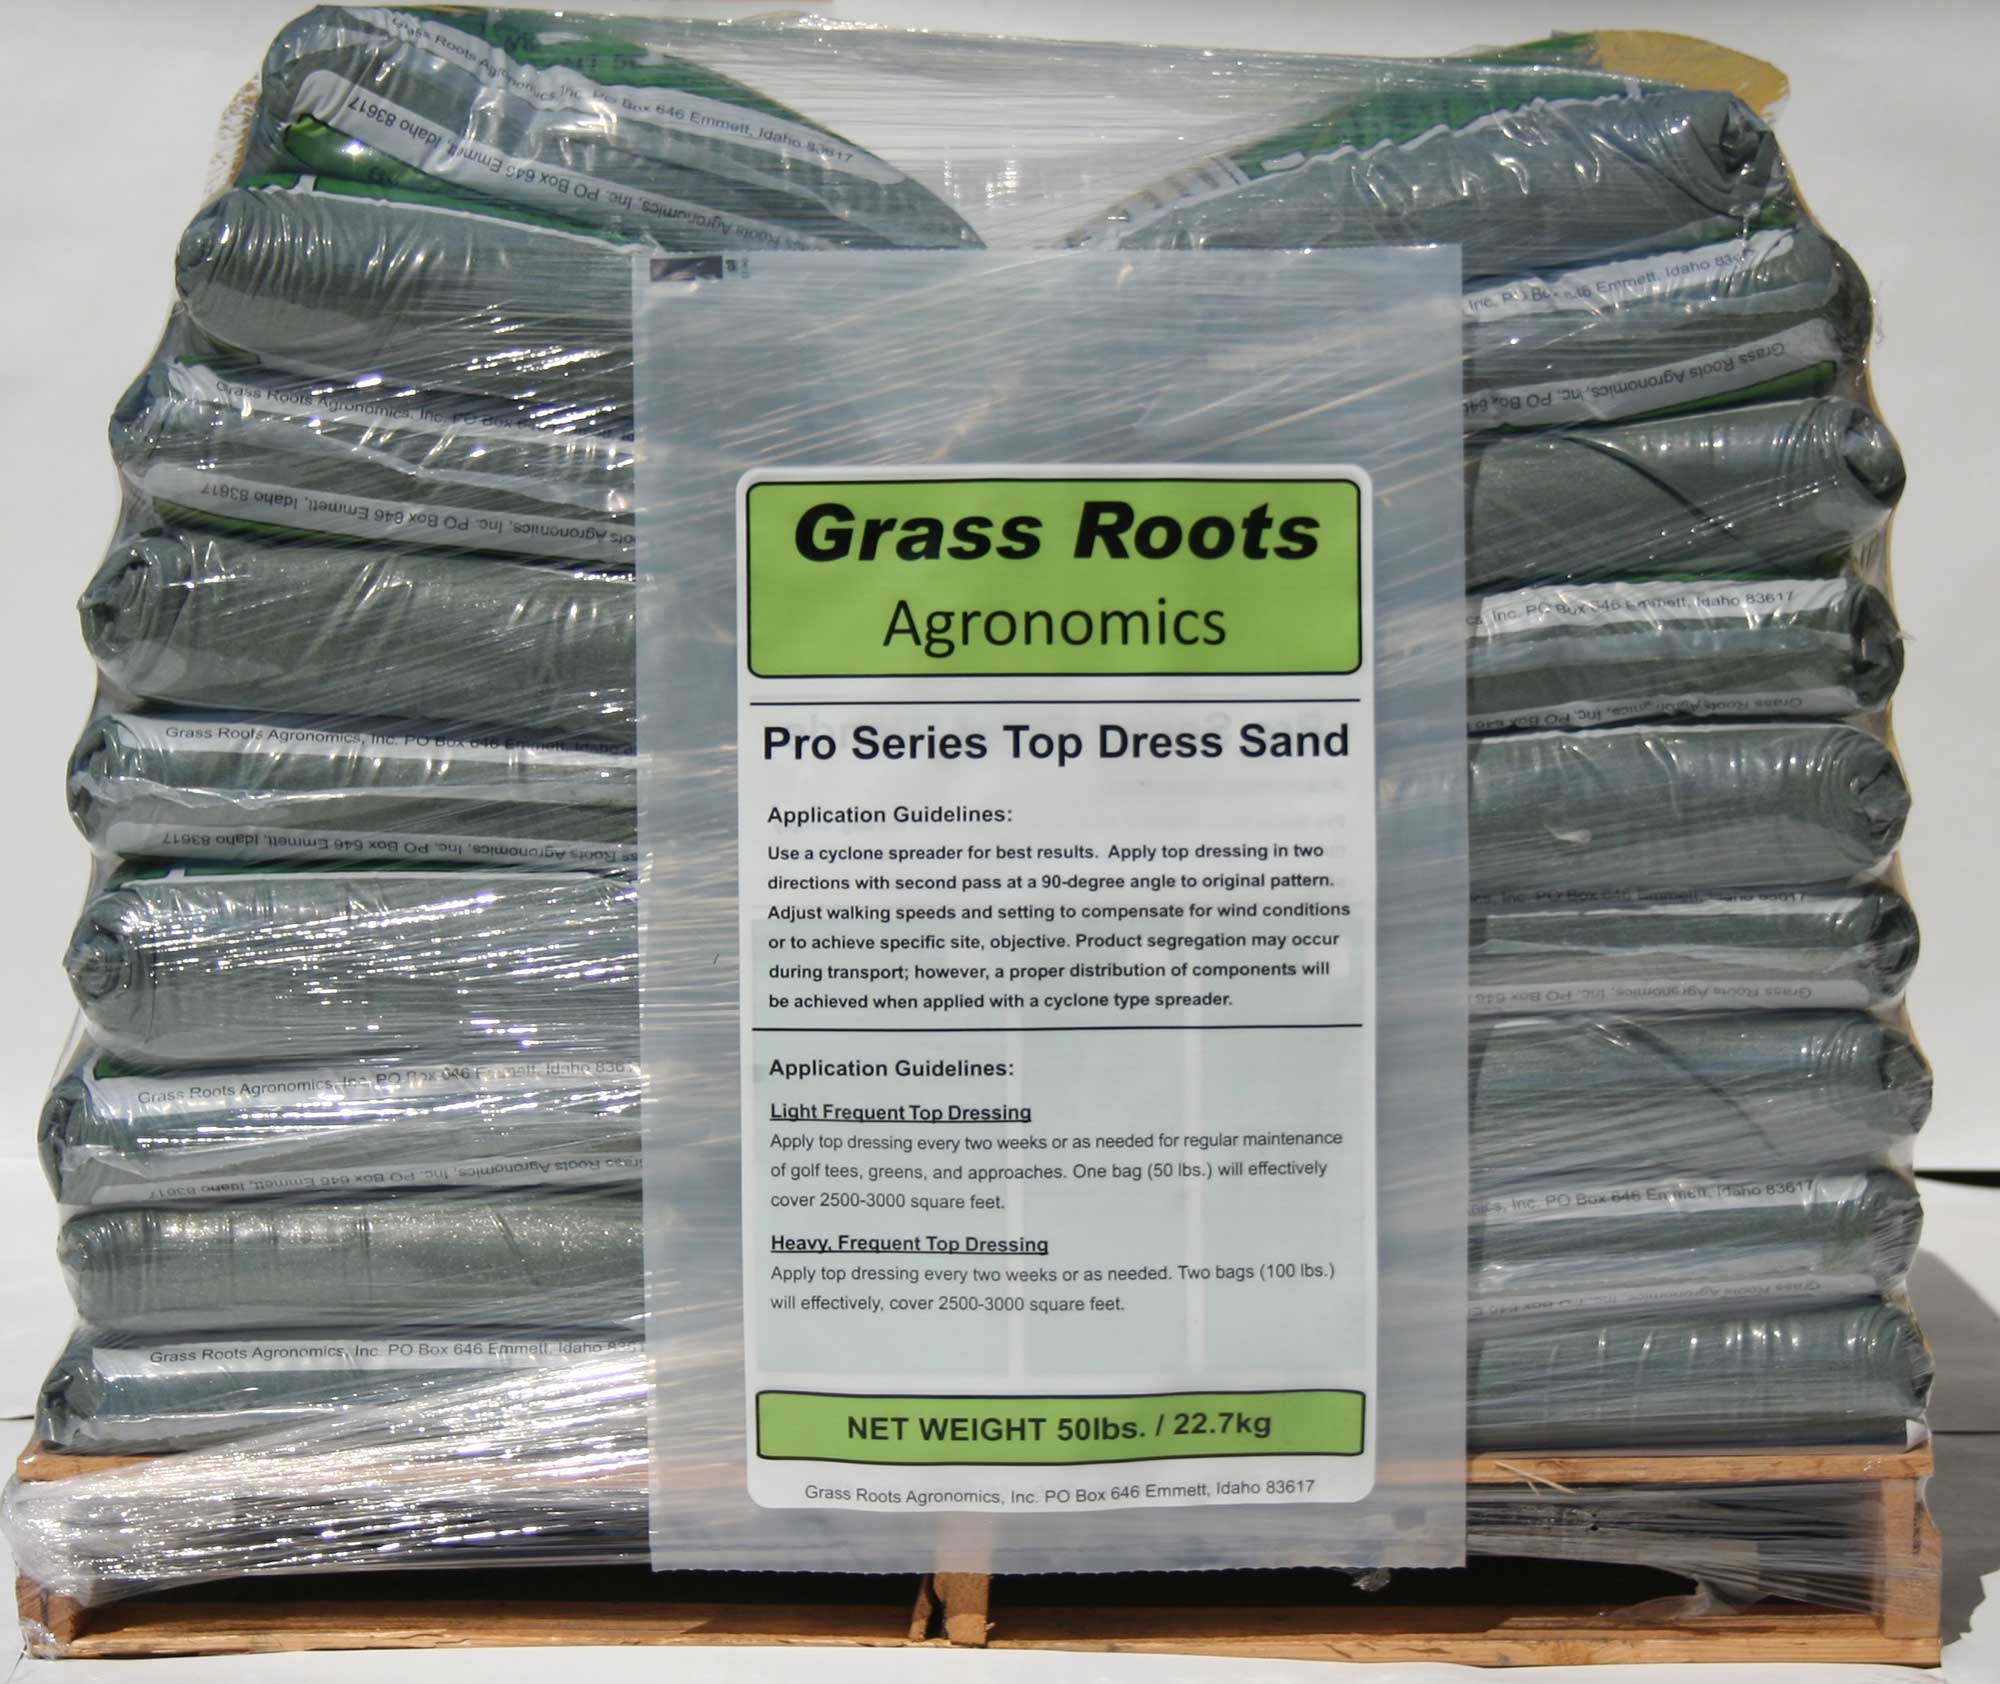 Grass Roots Agronomics - Top Dress Sand